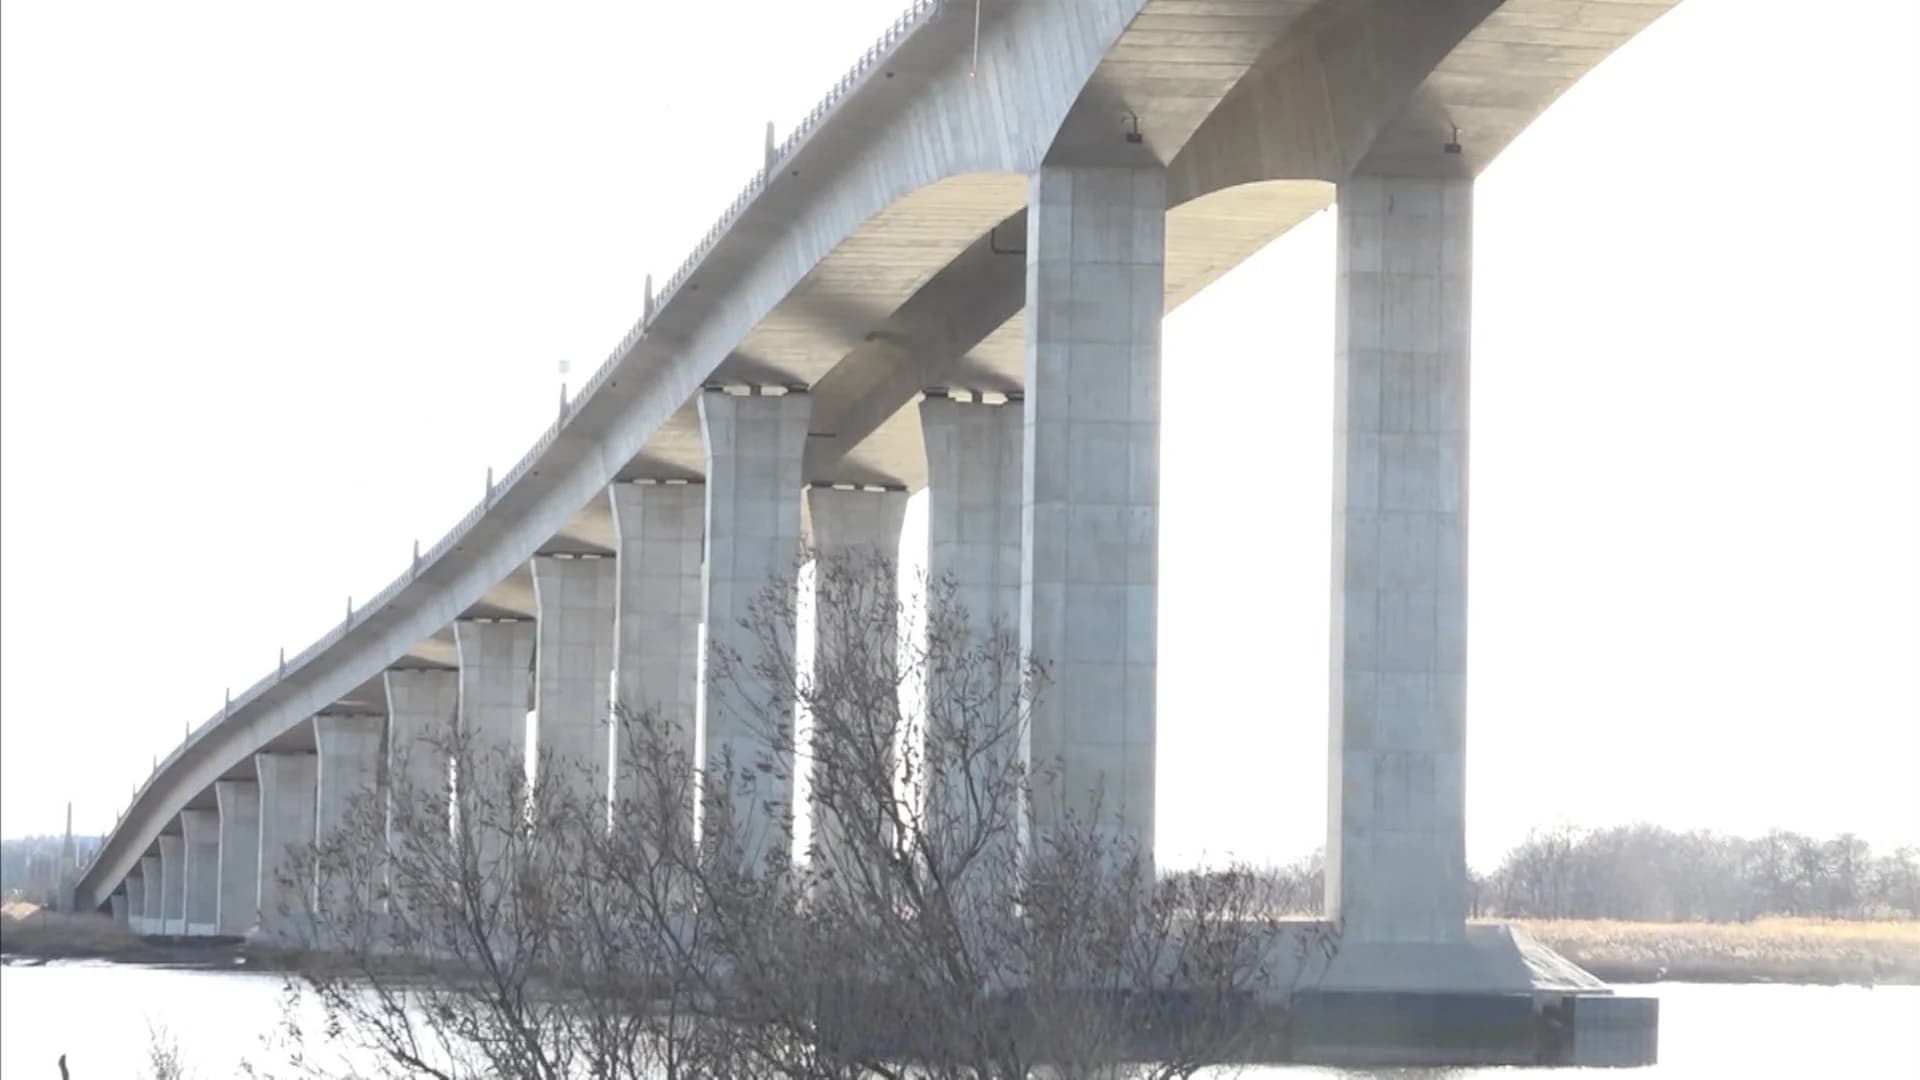 “A lot of pressure on us” – Perth Amboy officers reflect on bridge distress calls